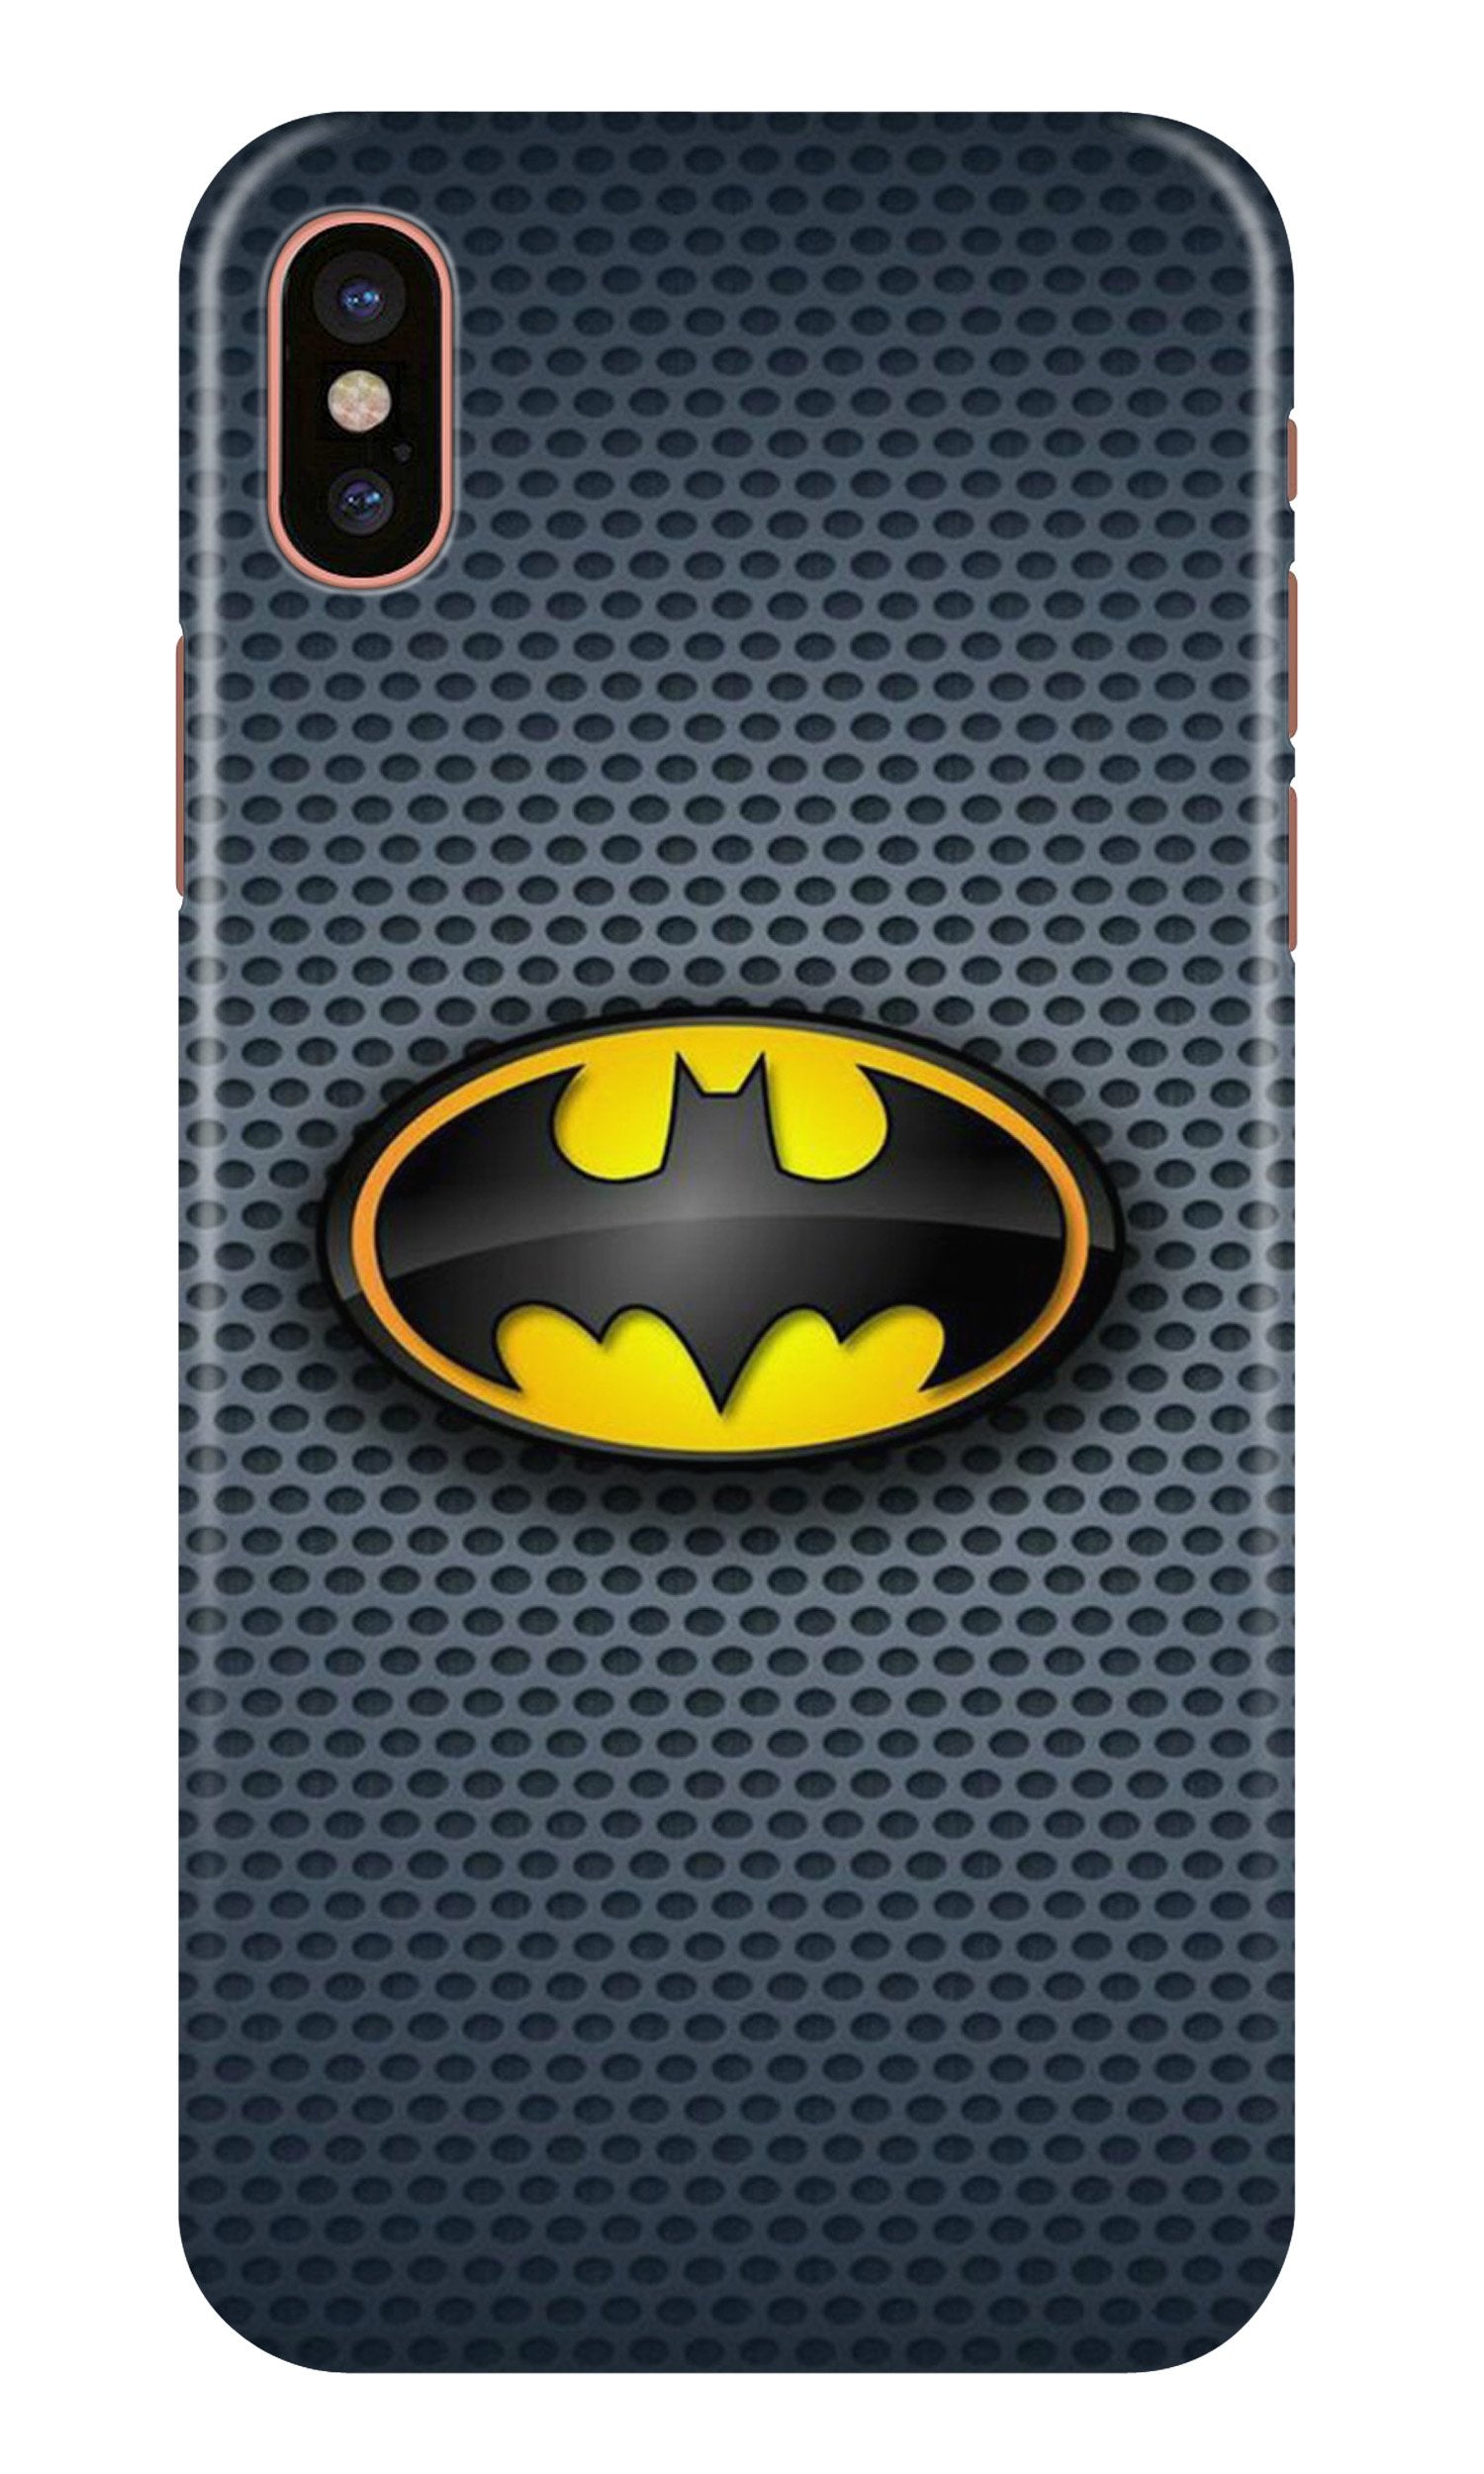 Batman Case for iPhone X (Design No. 244)